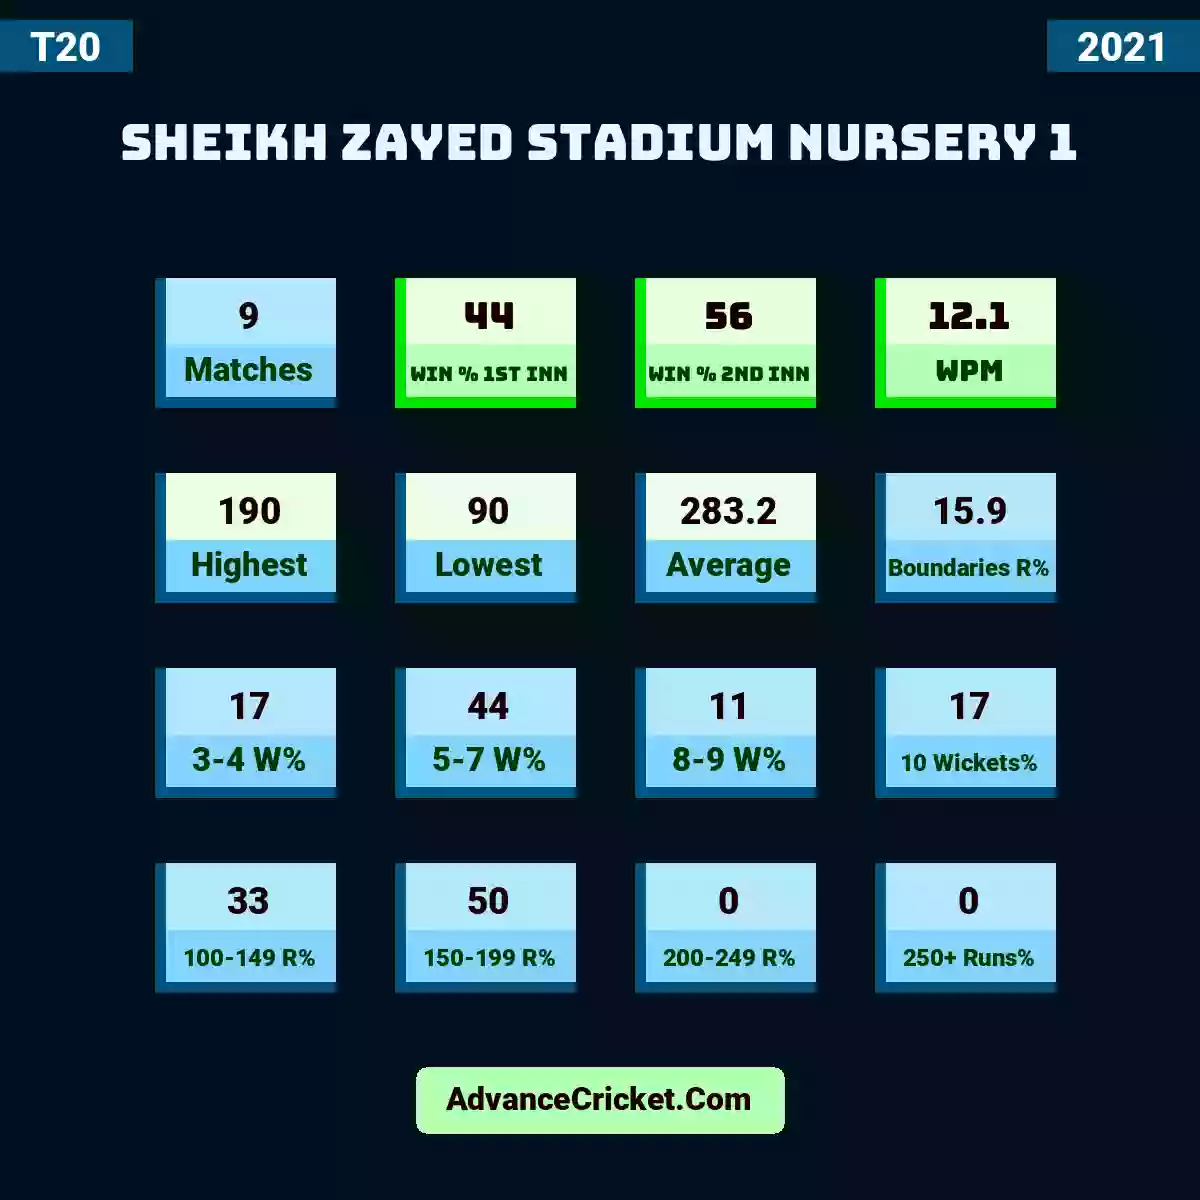 Image showing Sheikh Zayed Stadium Nursery 1 with Matches: 9, Win % 1st Inn: 44, Win % 2nd Inn: 56, WPM: 12.1, Highest: 190, Lowest: 90, Average: 283.2, Boundaries R%: 15.9, 3-4 W%: 17, 5-7 W%: 44, 8-9 W%: 11, 10 Wickets%: 17, 100-149 R%: 33, 150-199 R%: 50, 200-249 R%: 0, 250+ Runs%: 0.